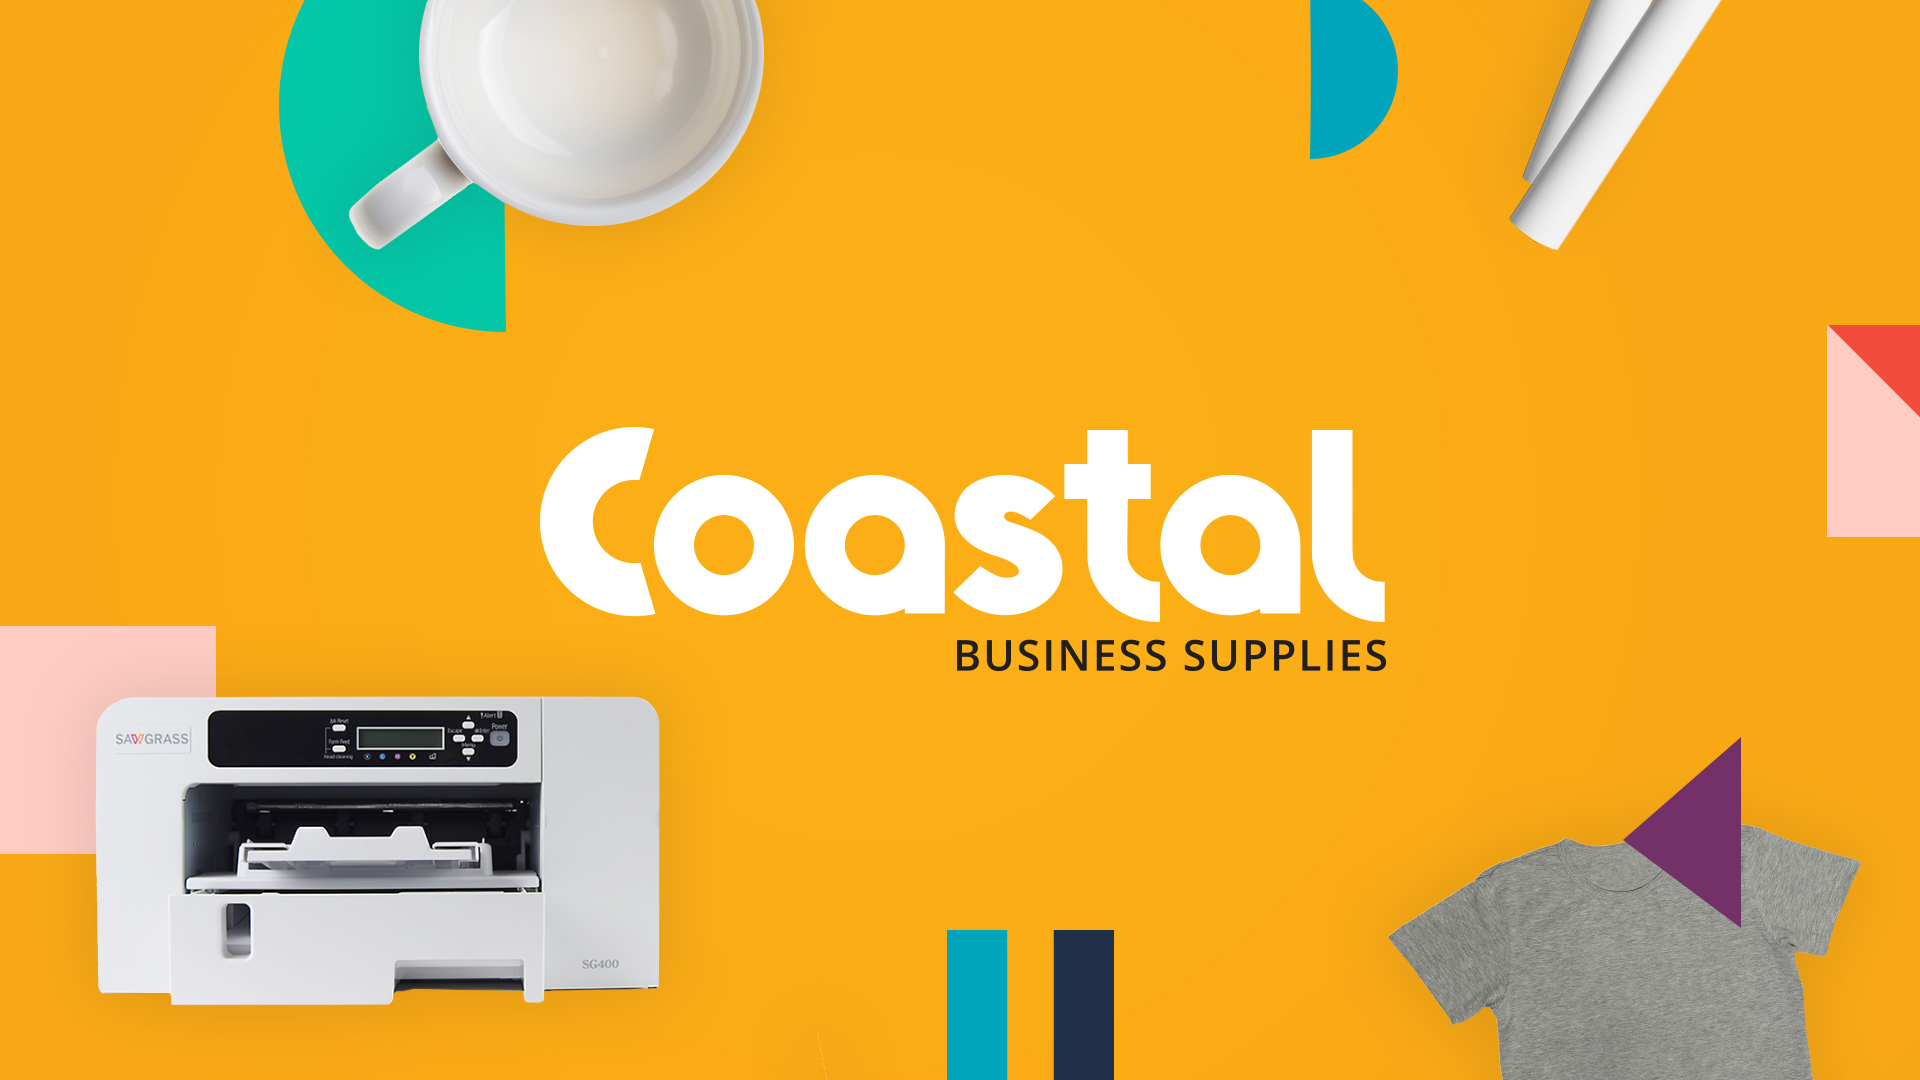 Branding and Design for Coastal Business